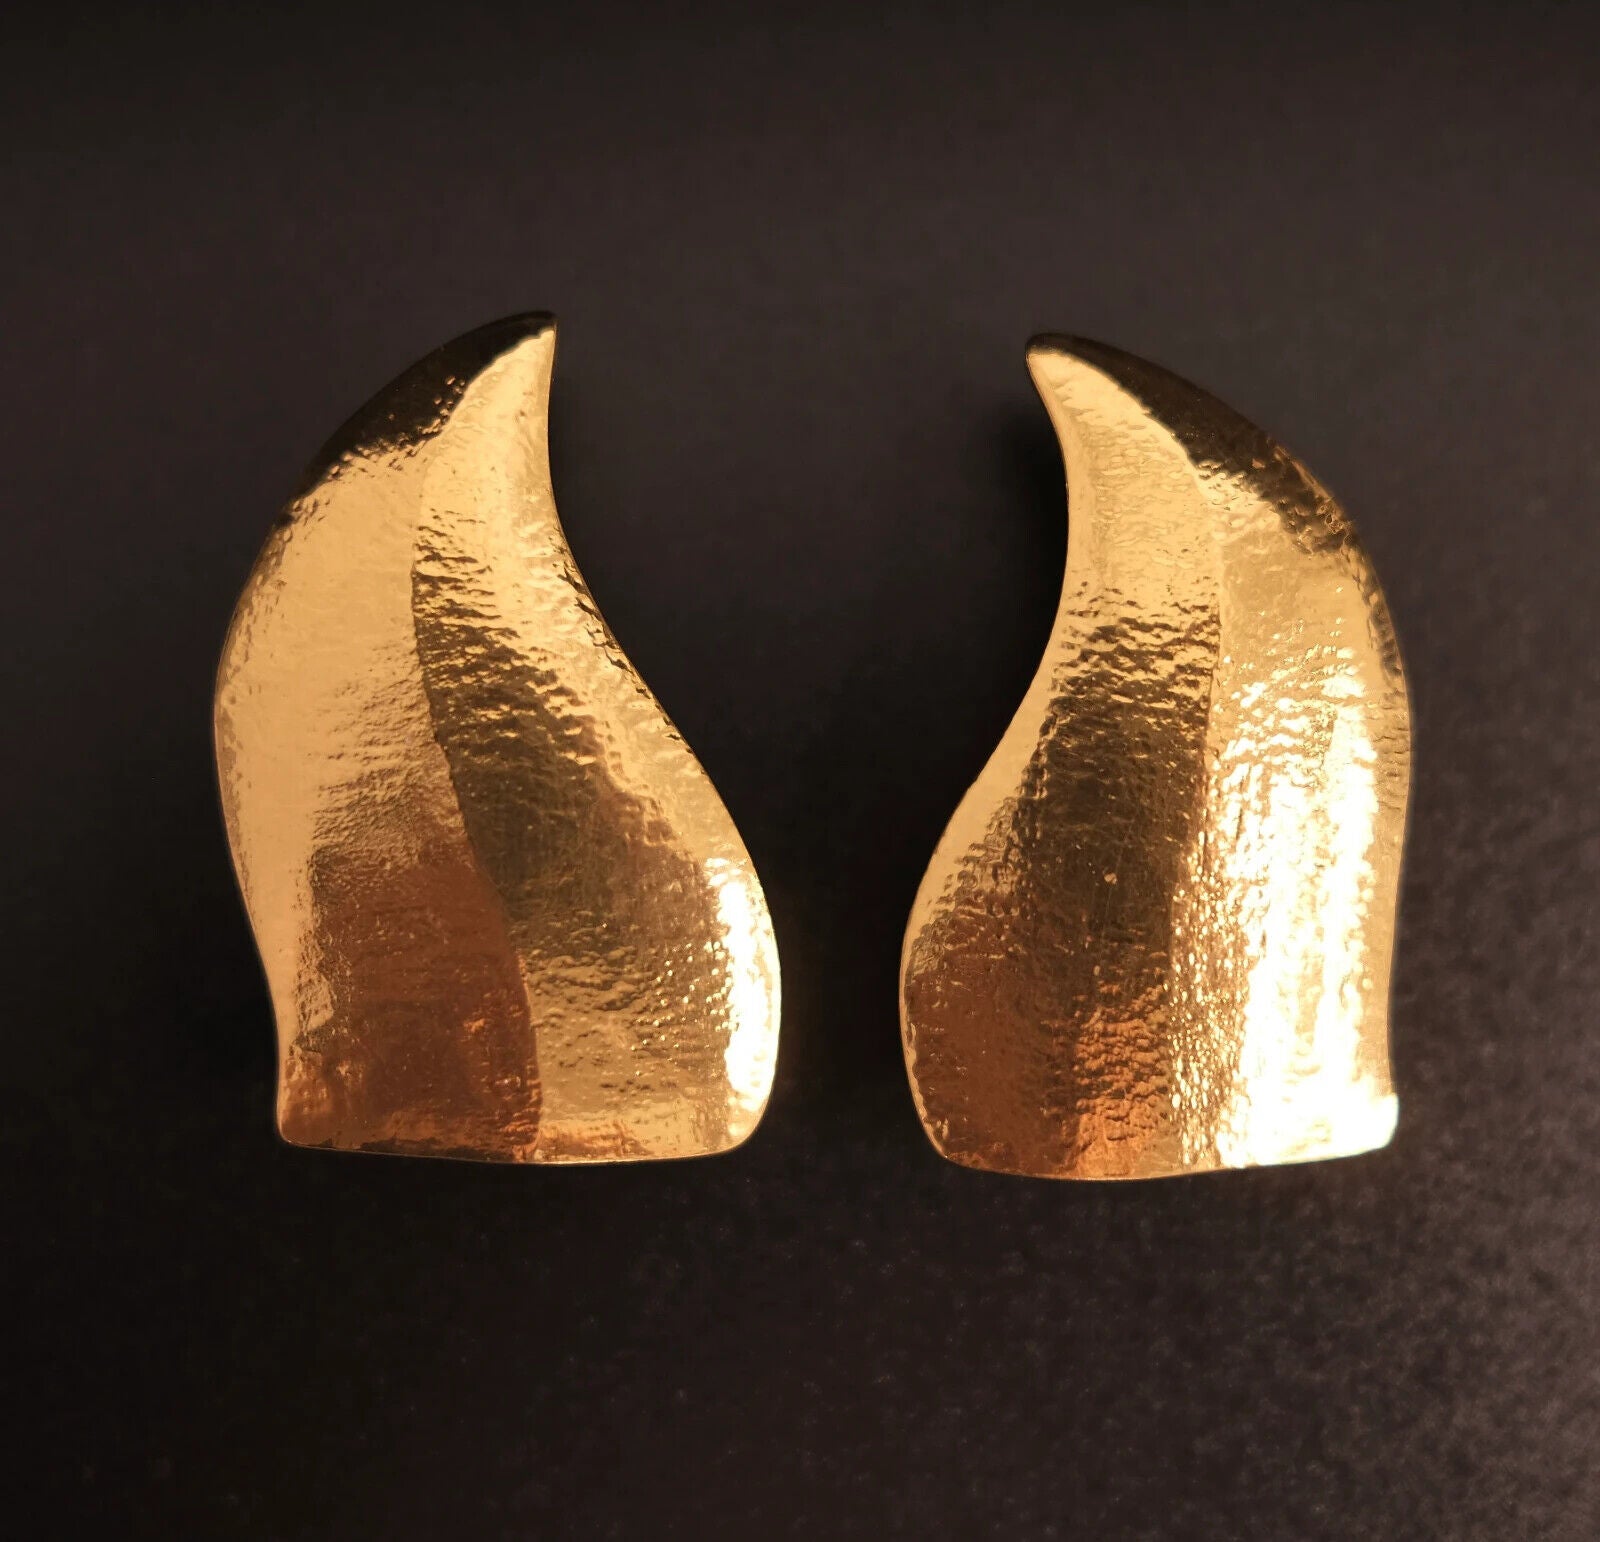 Saint Laurent Earrings YSL  Large earrings vintage Fire Flame Earrings, Clip-on Earrings, Vintage Jewelry Gold, YSL made in France